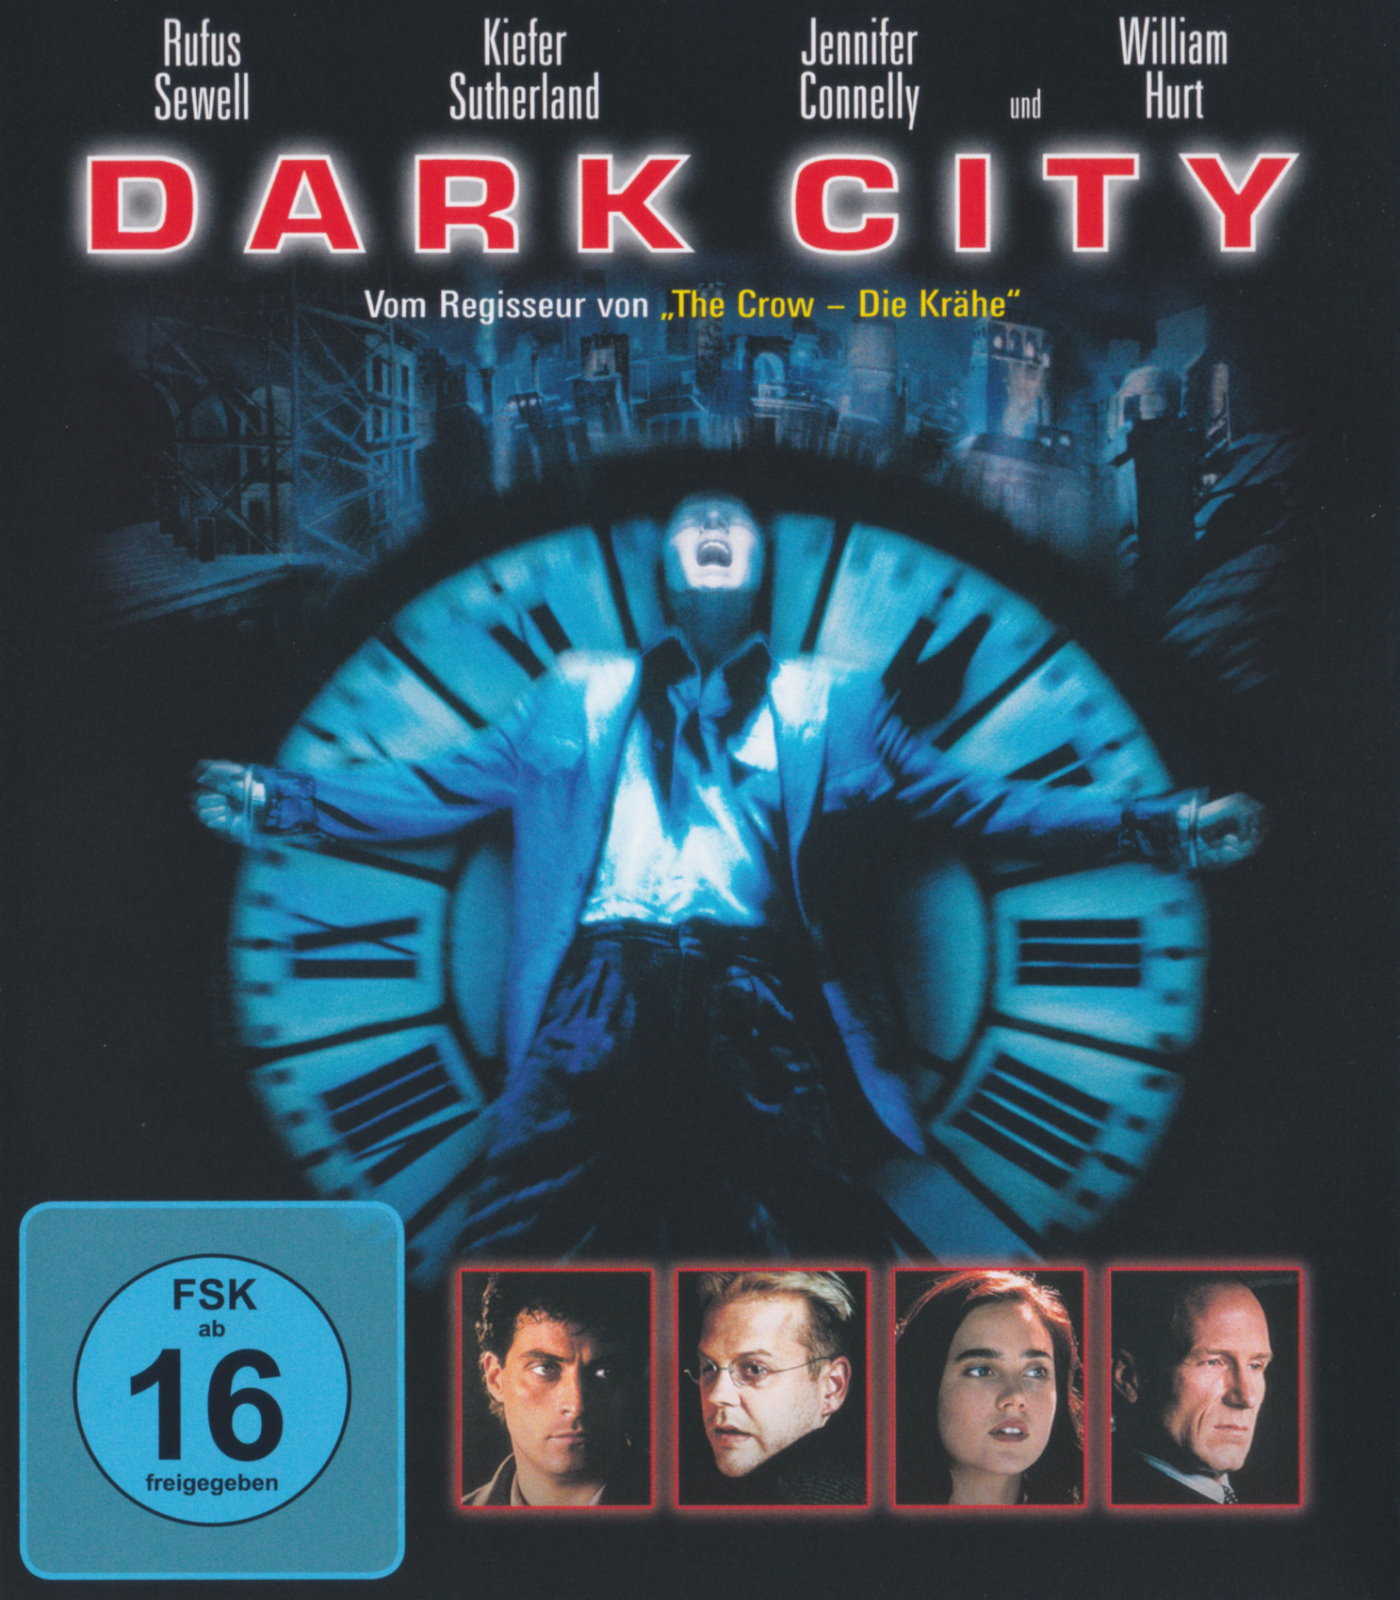 Cover - Dark City.jpg